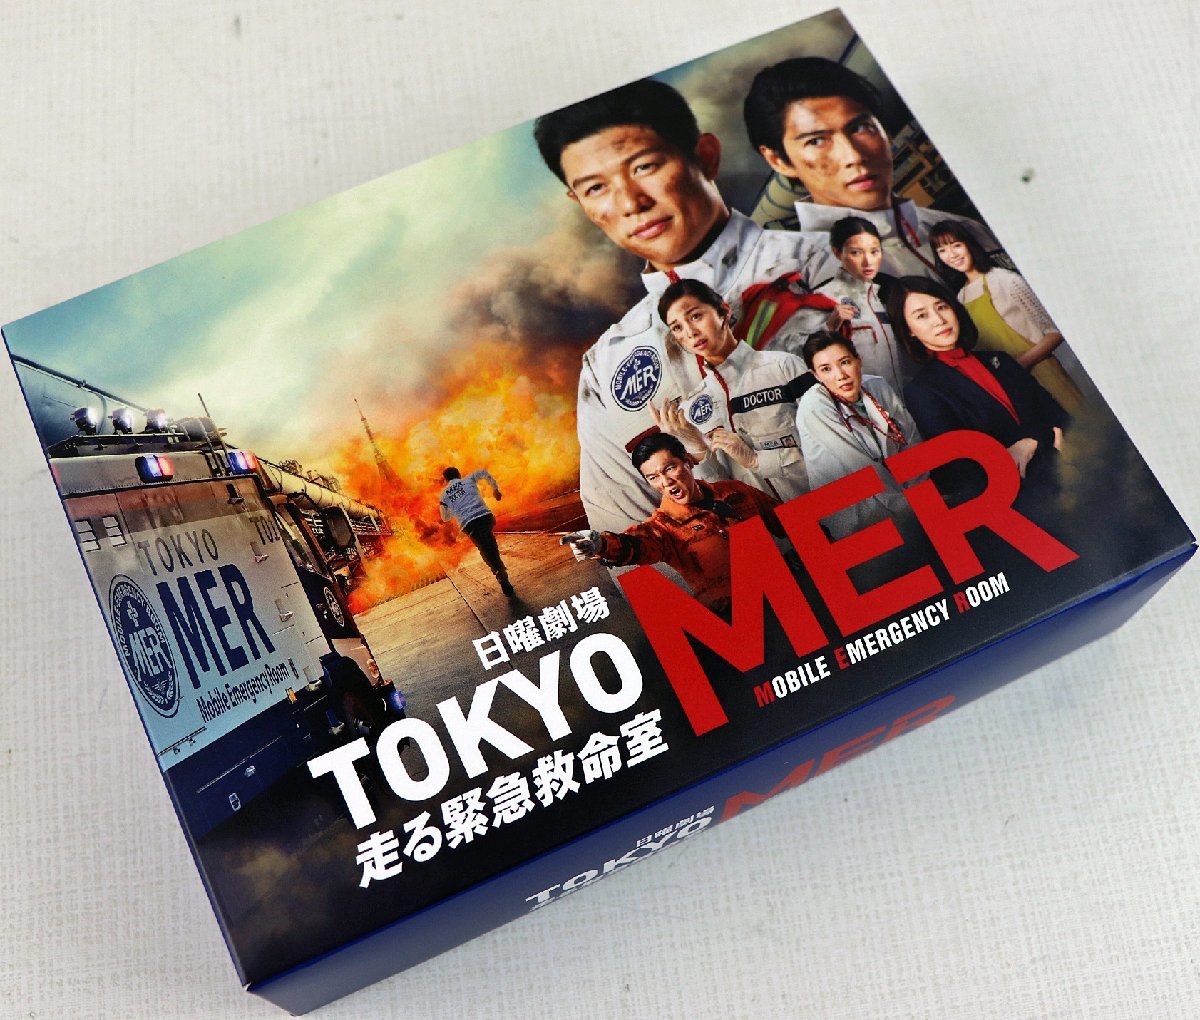 TOKYO MER～走る緊急救命室～ Blu-ray BOX〈4枚組〉